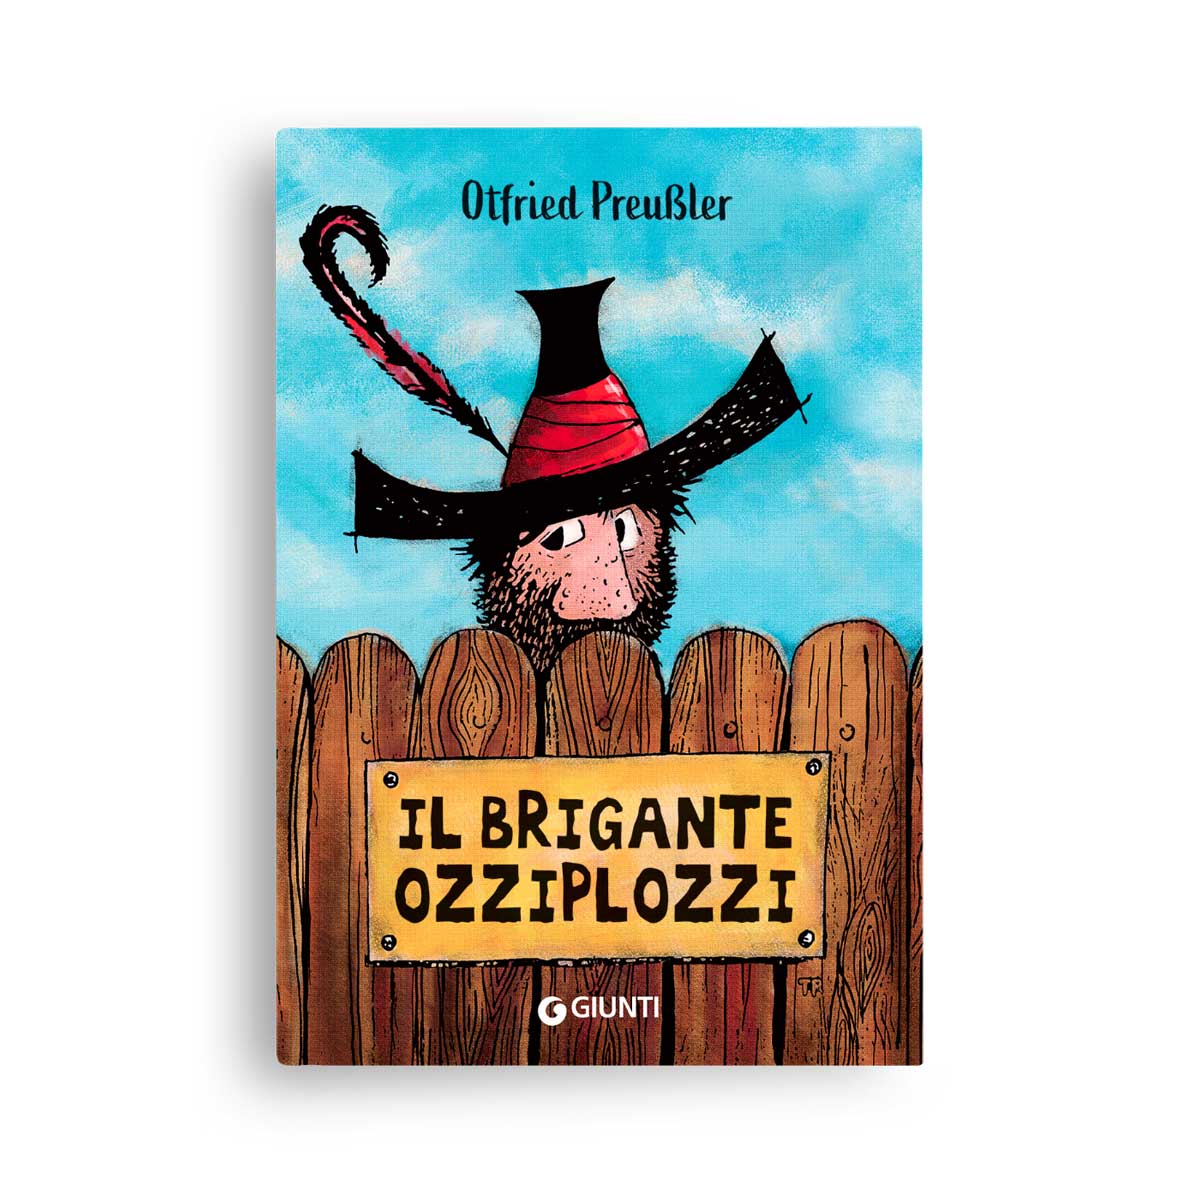 Otfried-Preussler-Il-brigante-Ozziplozzi-Cover.jpg